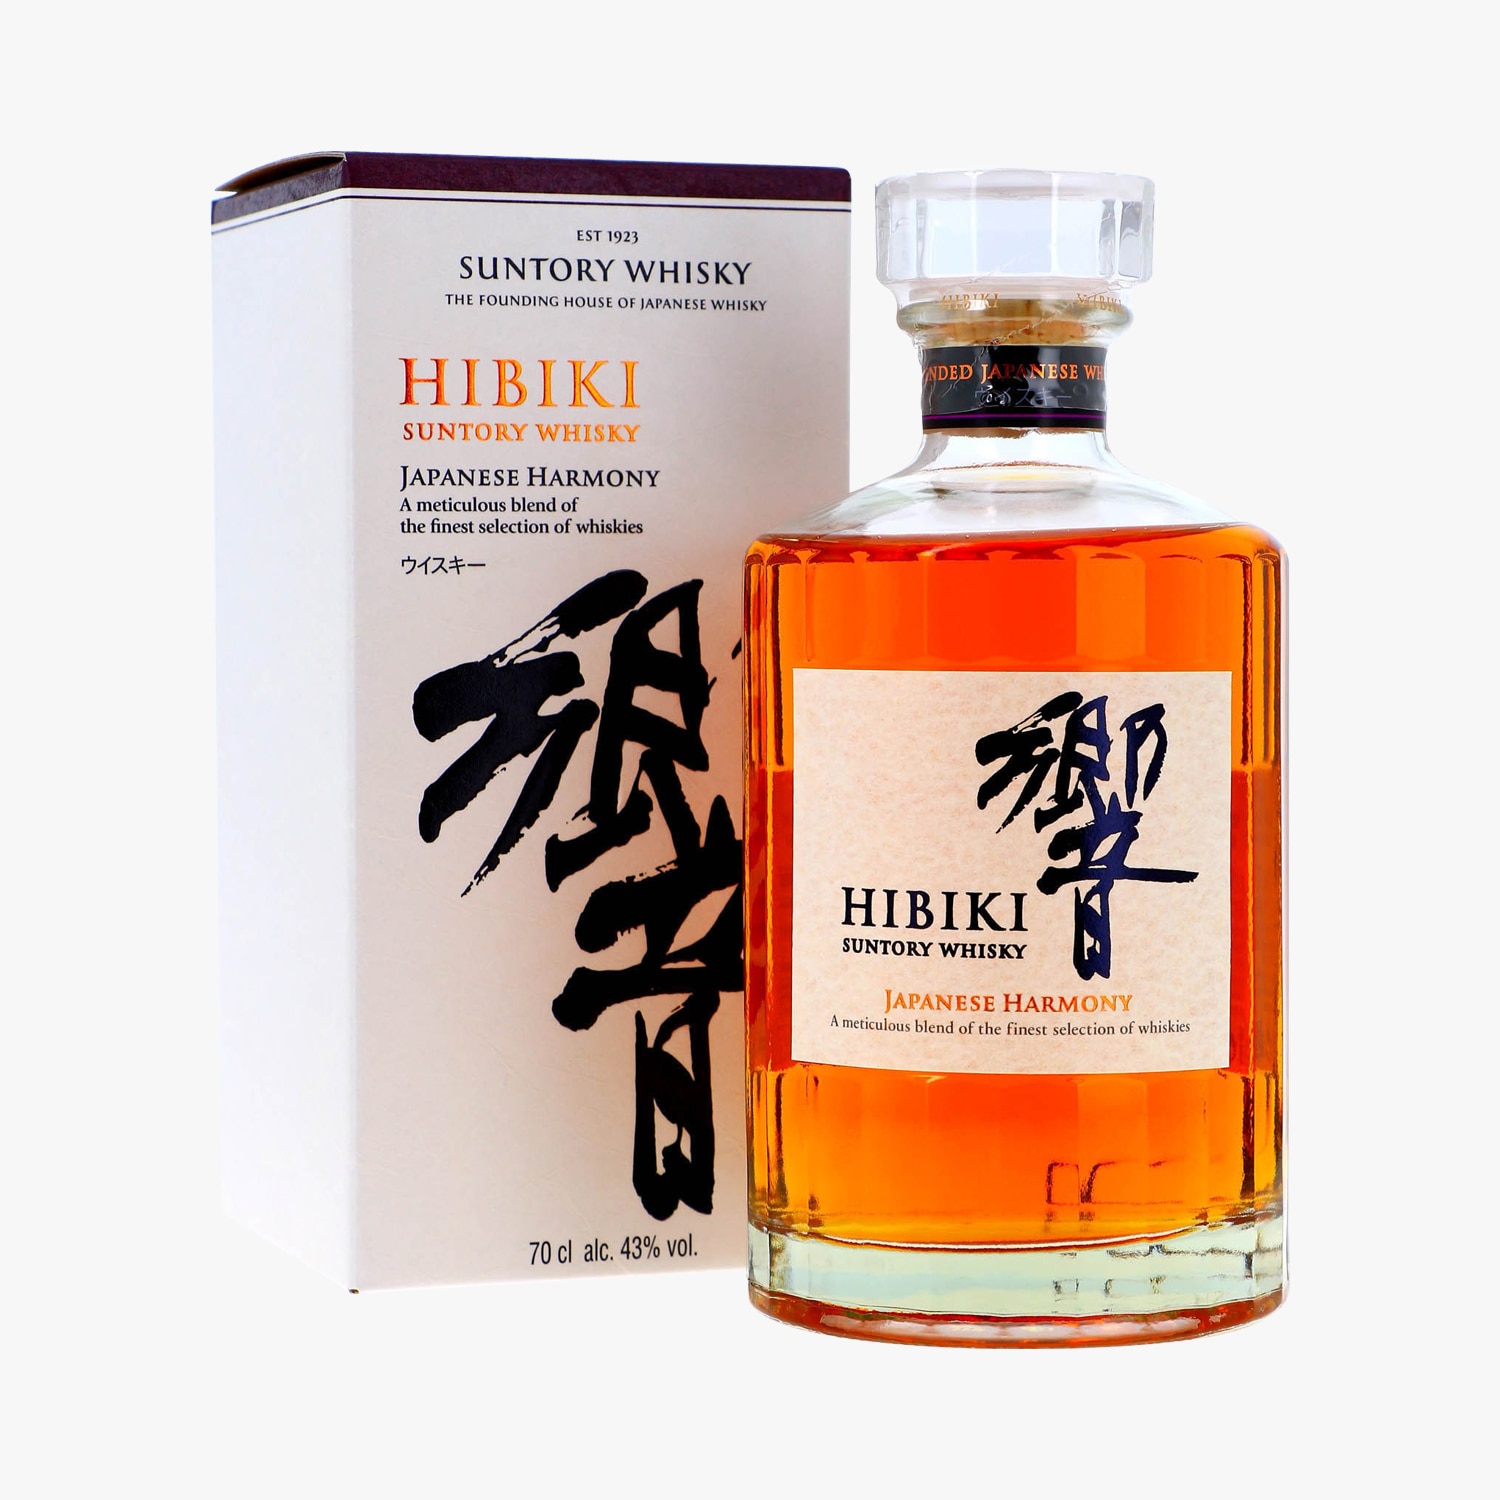 Whisky Hibiki, Japanese Harmony - Suntory